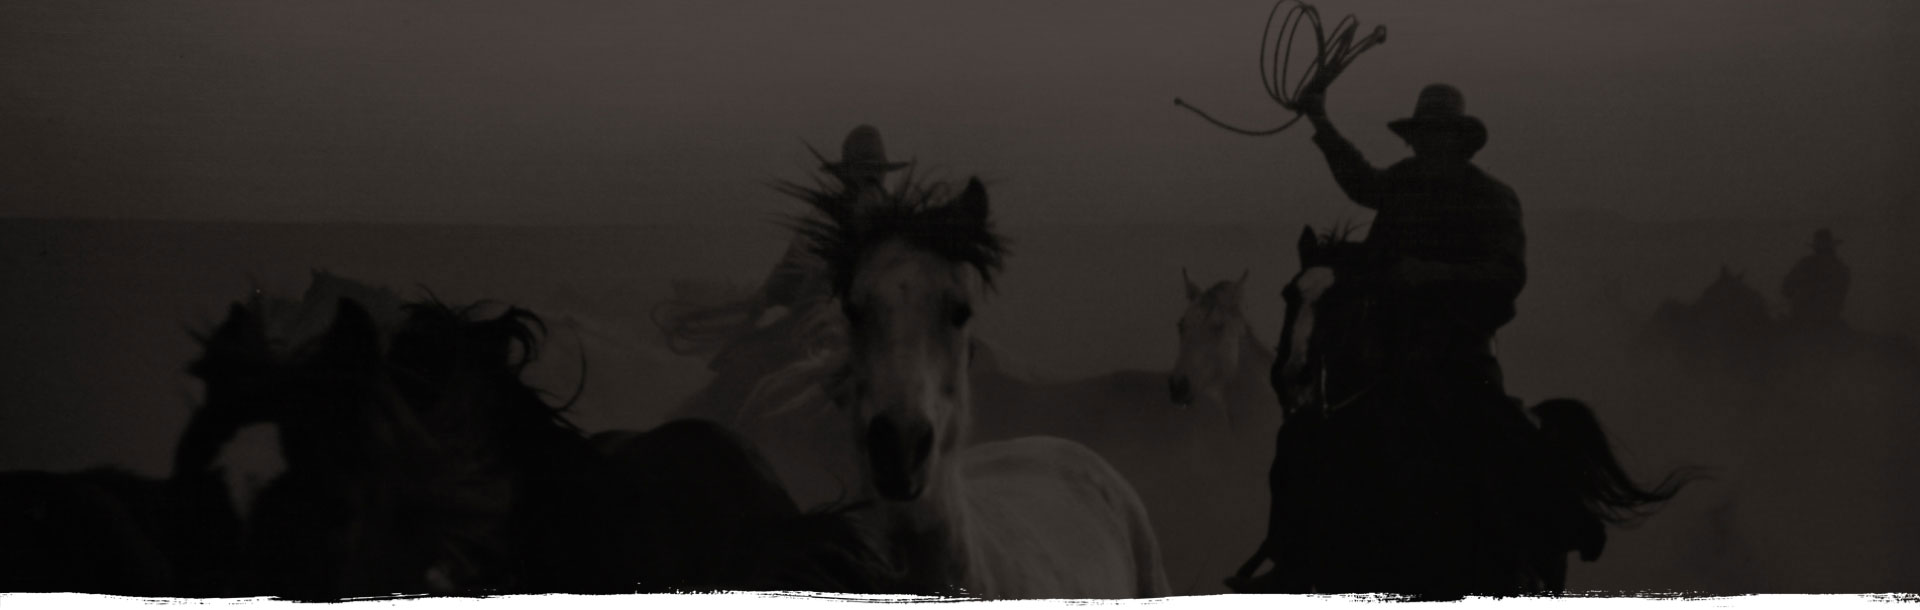 cowboy and horses